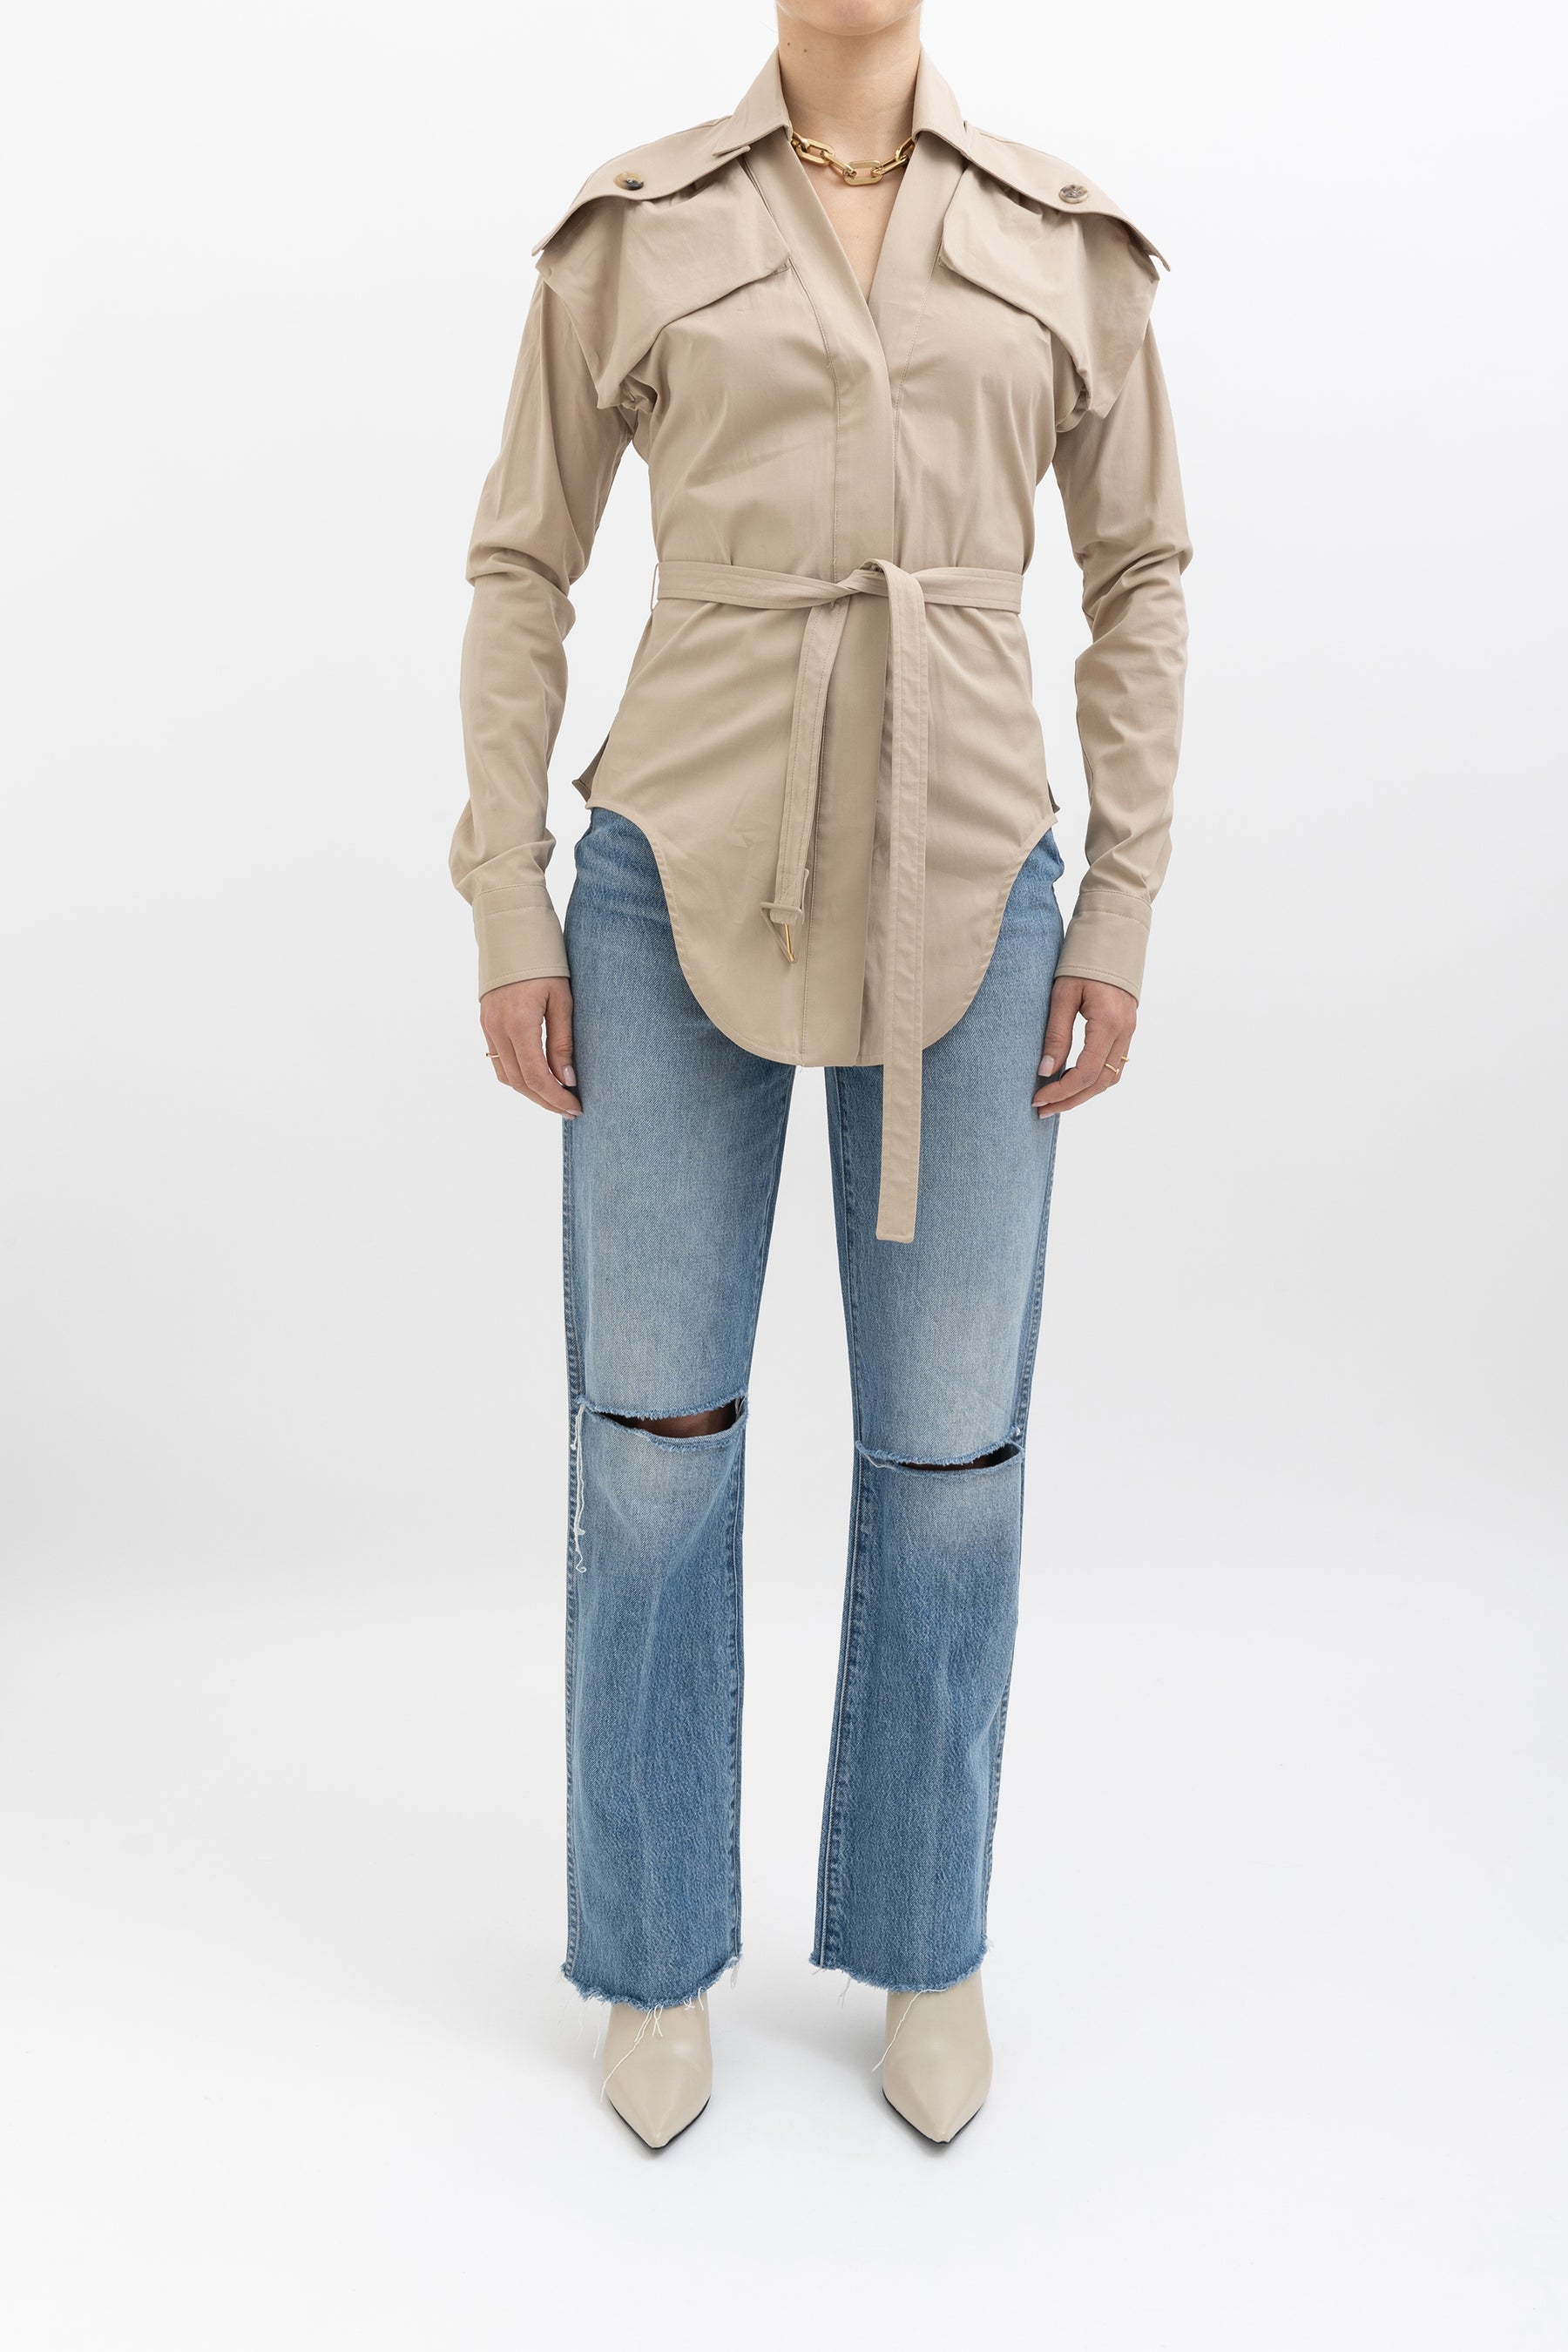 bottega-veneta-cotton-poplin-utility-shirt-with-belt-36-it-986d